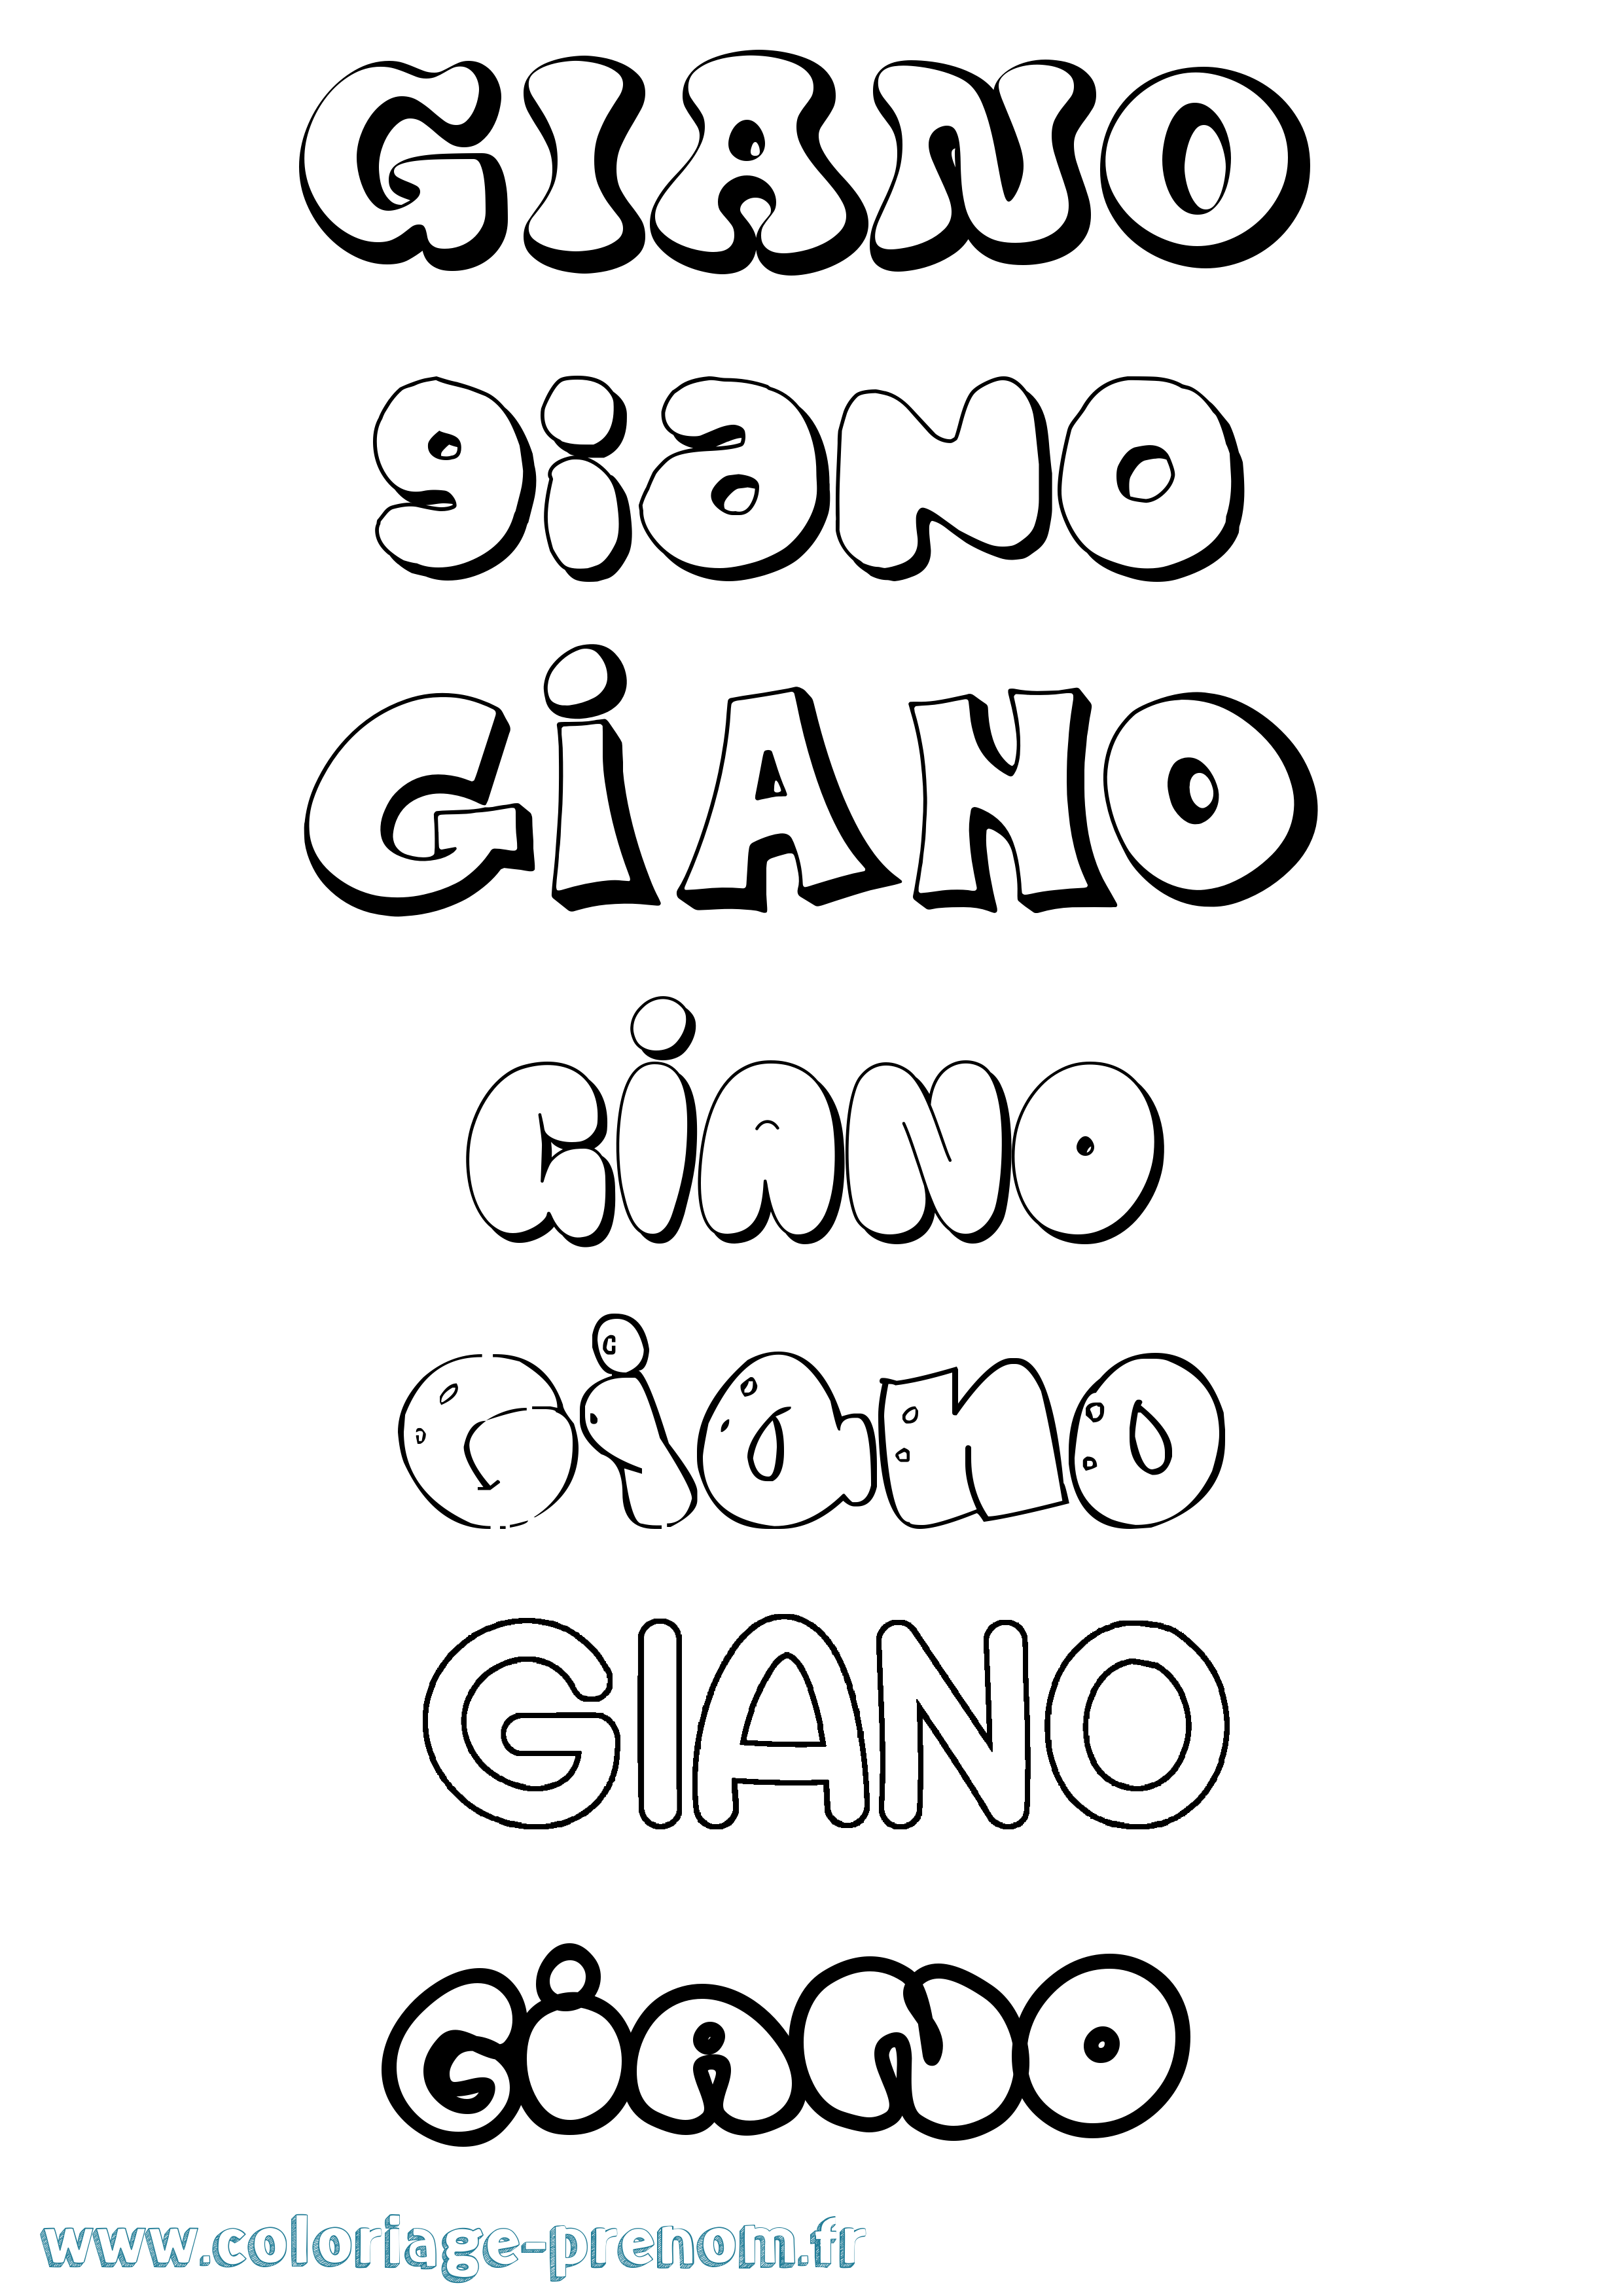 Coloriage prénom Giano Bubble